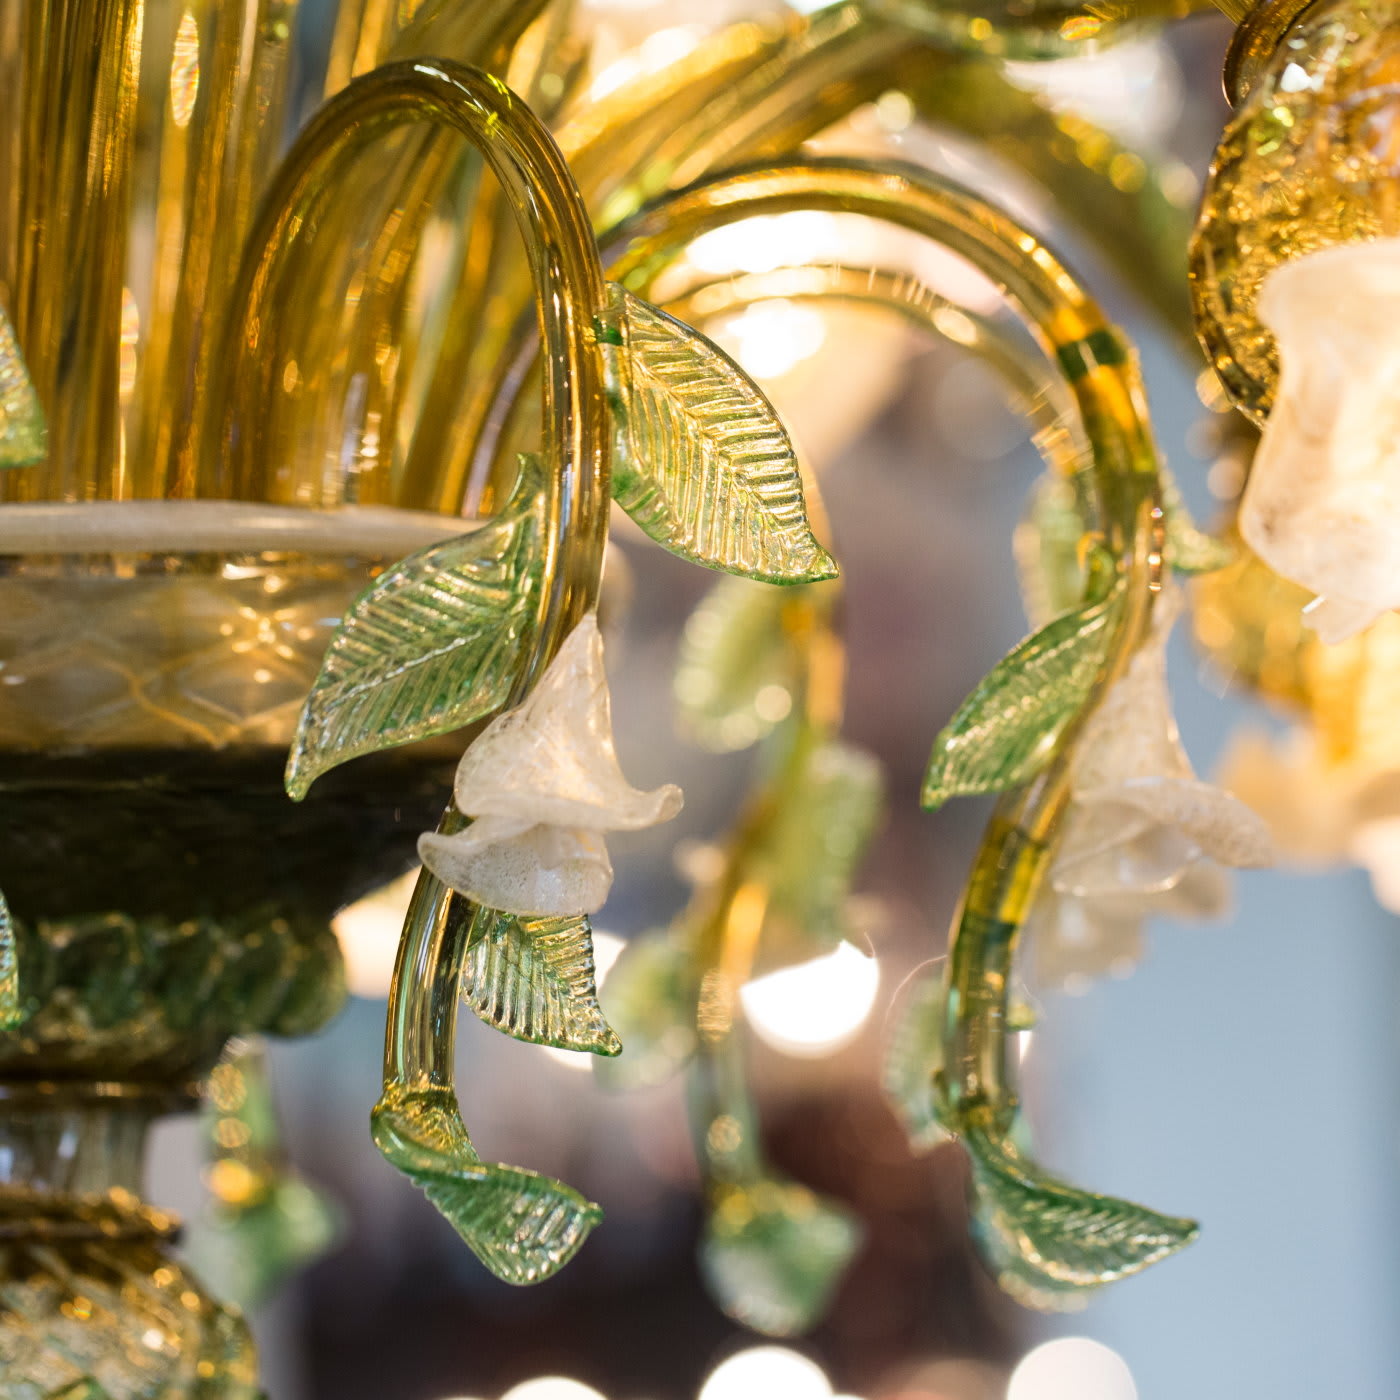 Yellow Stem Venetian Glass Glacier Wine Glass - Handmade in Italy